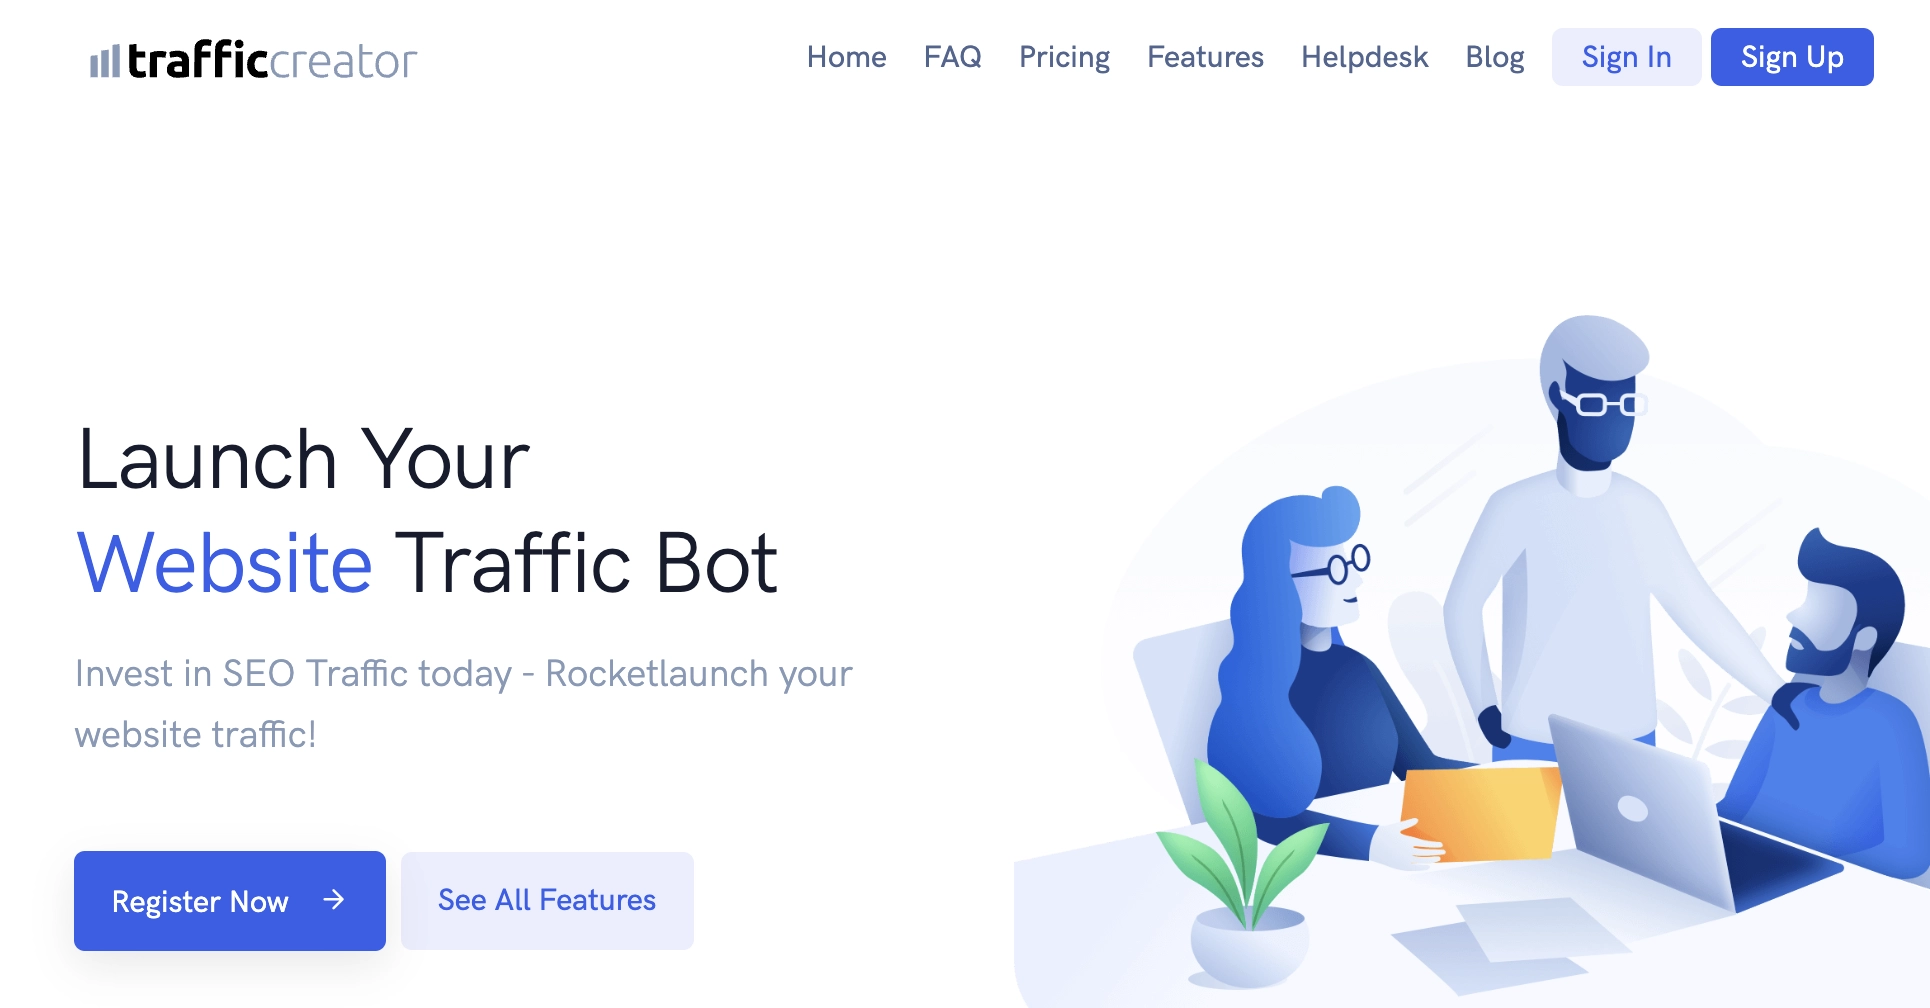 Traffic Creator Homepage Image